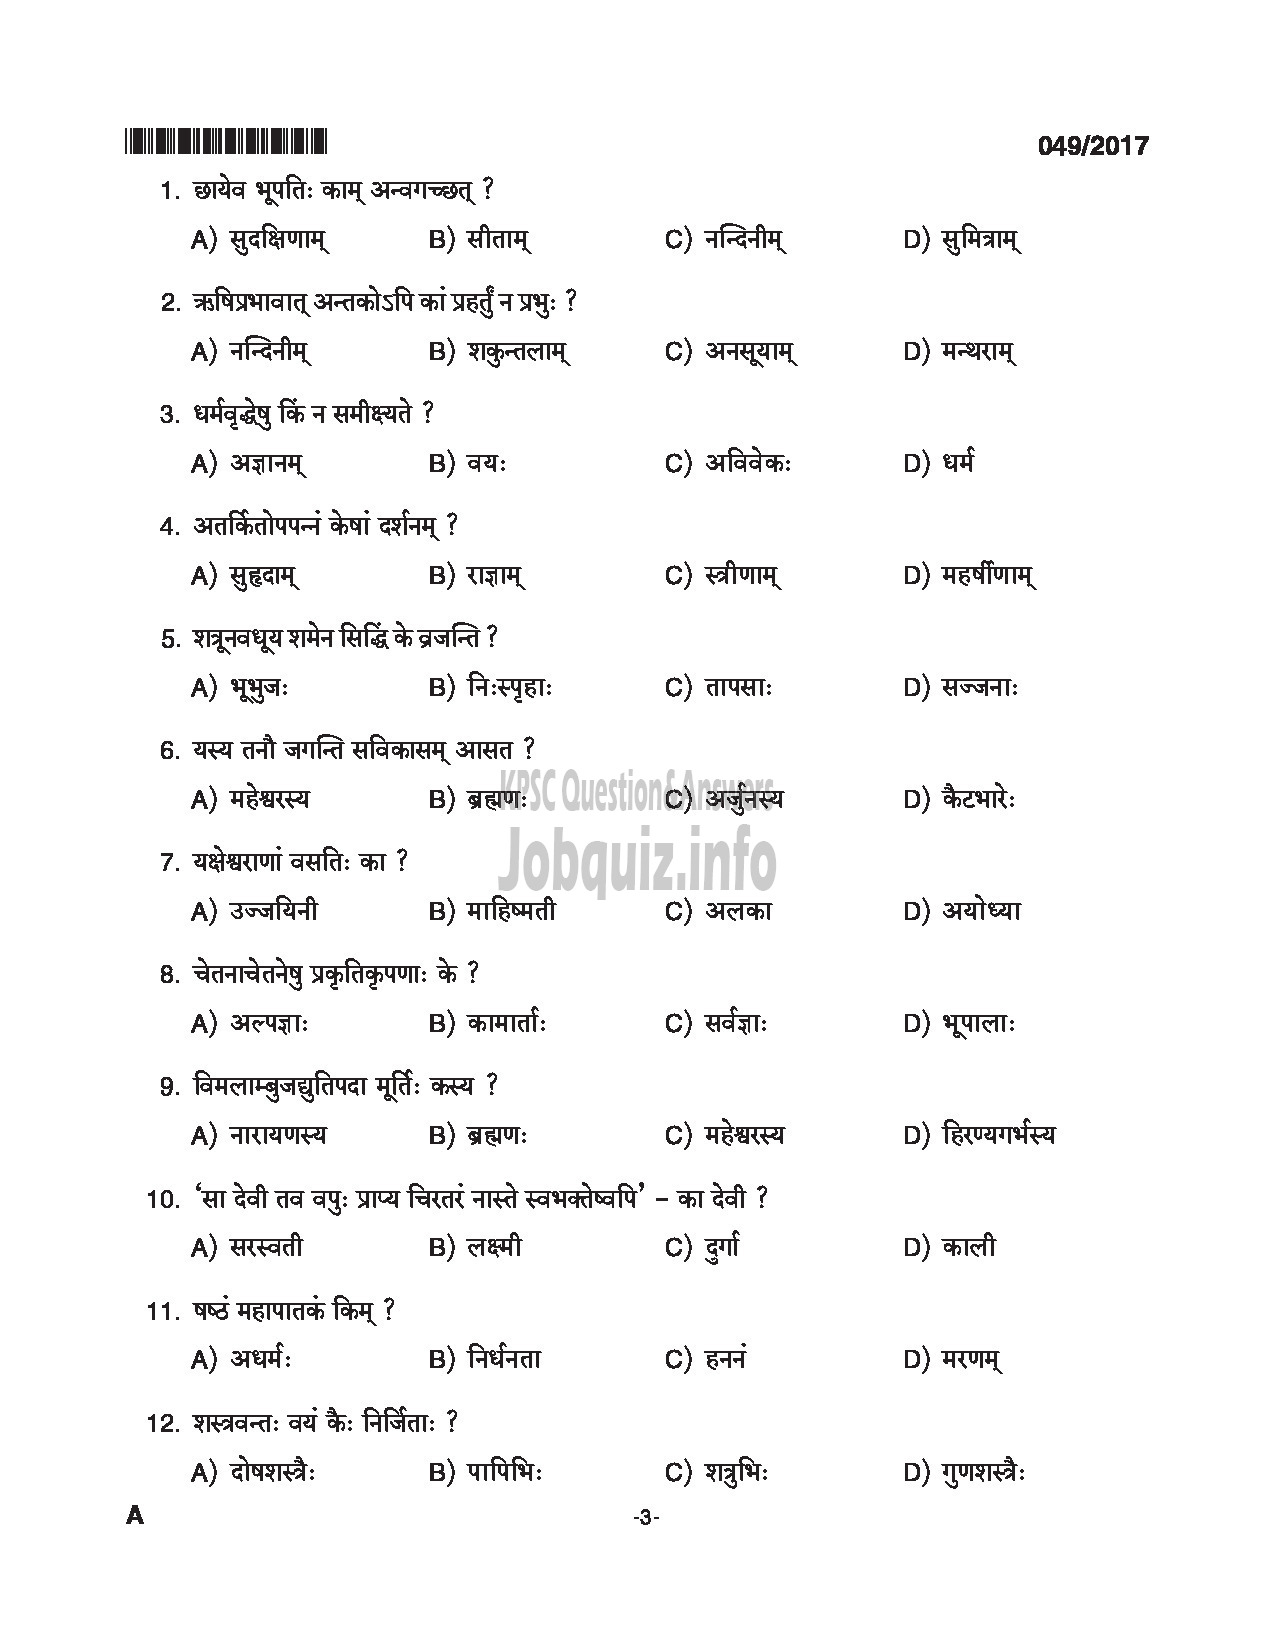 Kerala PSC Question Paper - LECTURER IN SANSKRIT GENERAL COLLEGIATE EDN 133/2015-3